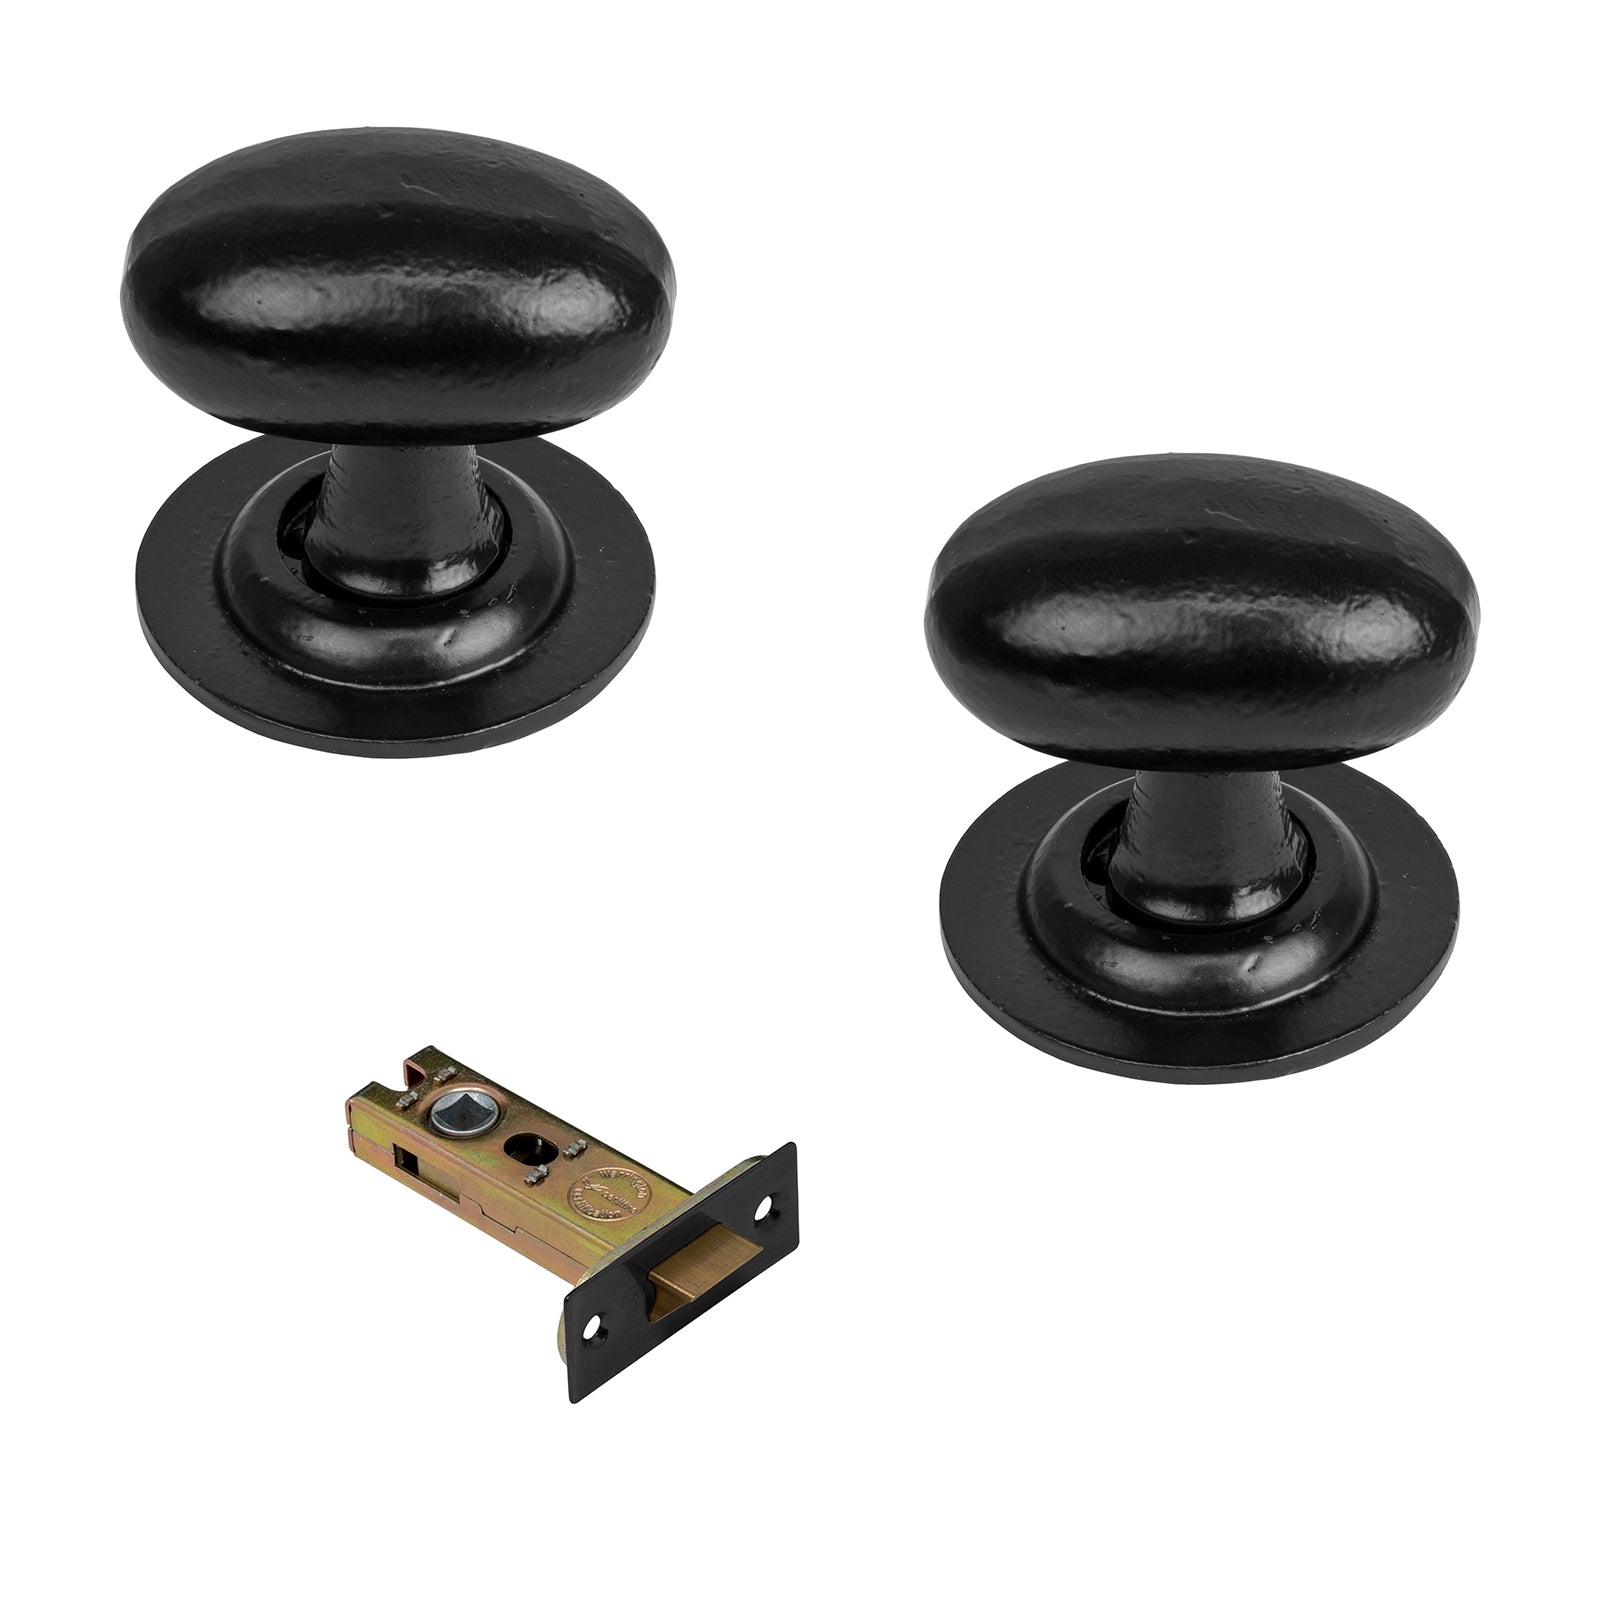 Oval black cast iron door knobs 3 inch latch set